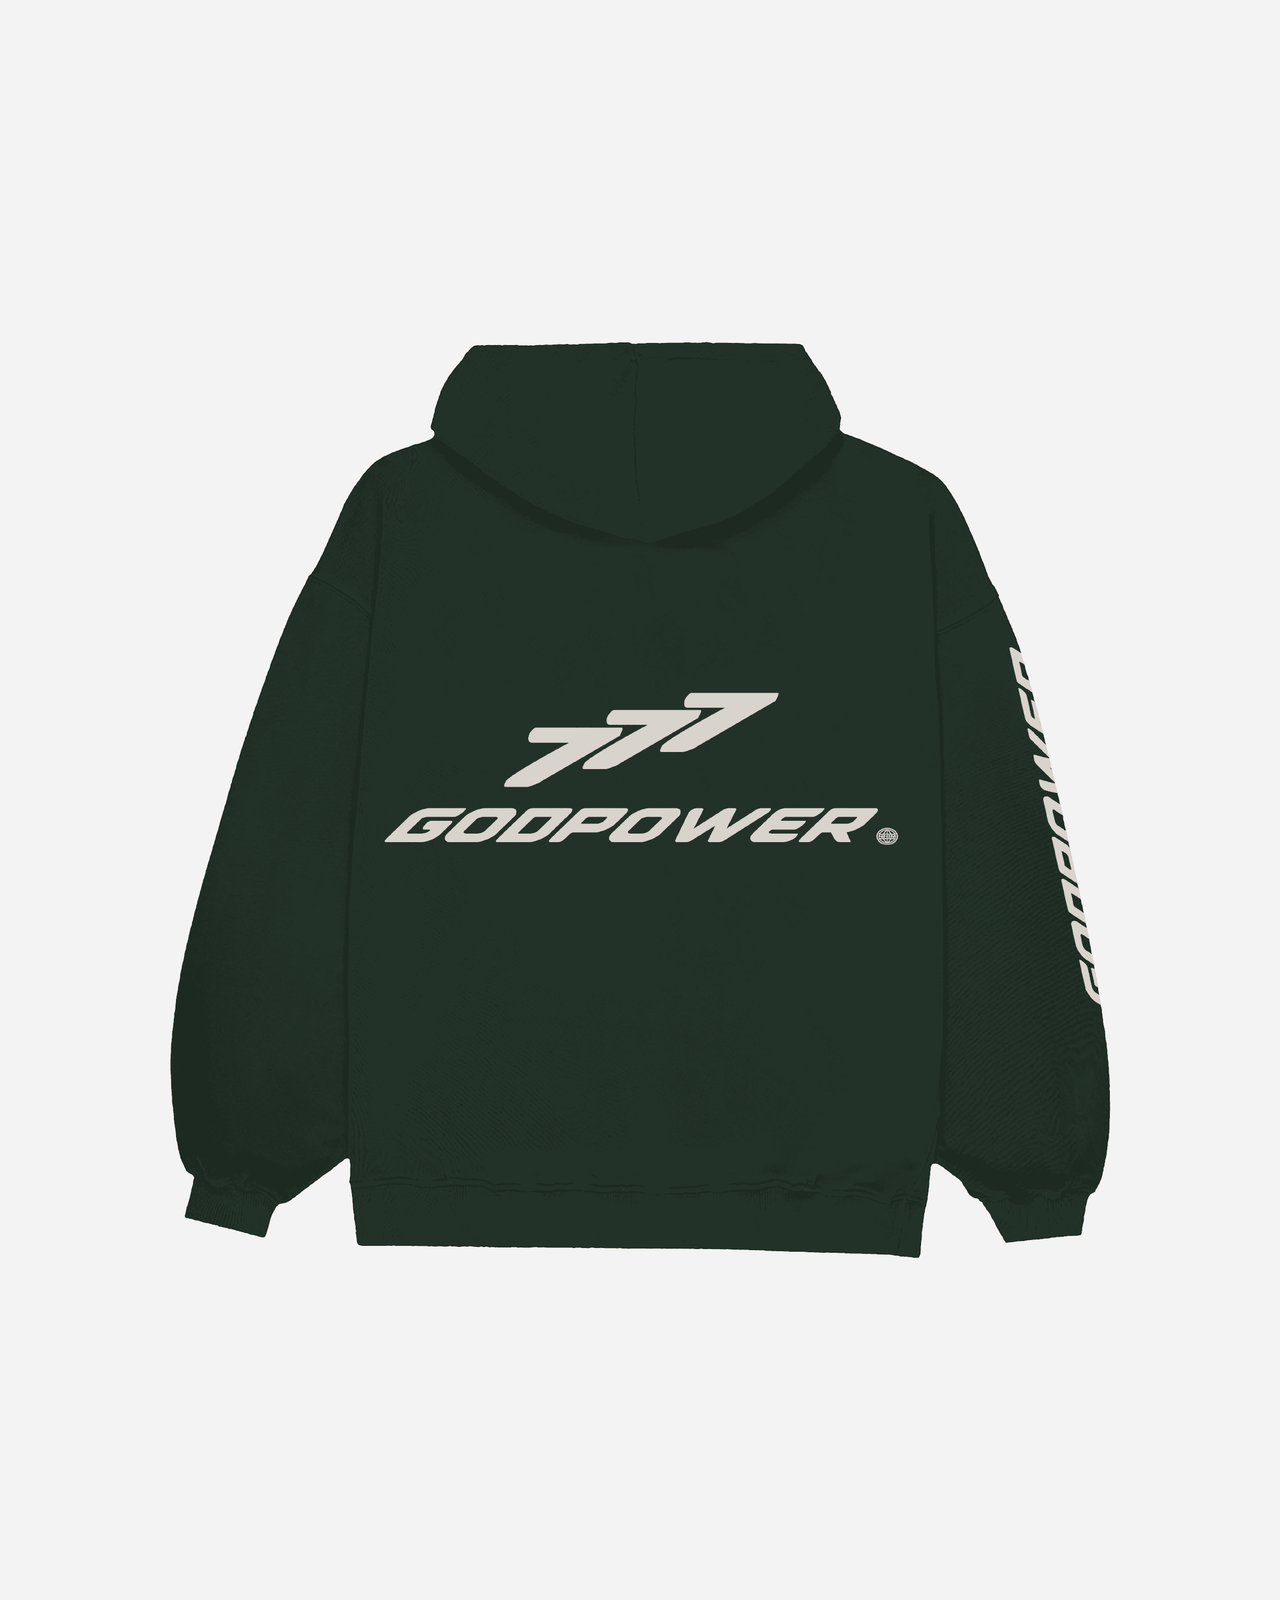 GODPOWER forest hoodie christian sweatshirt by NHIM Apparel Christian clothing brand